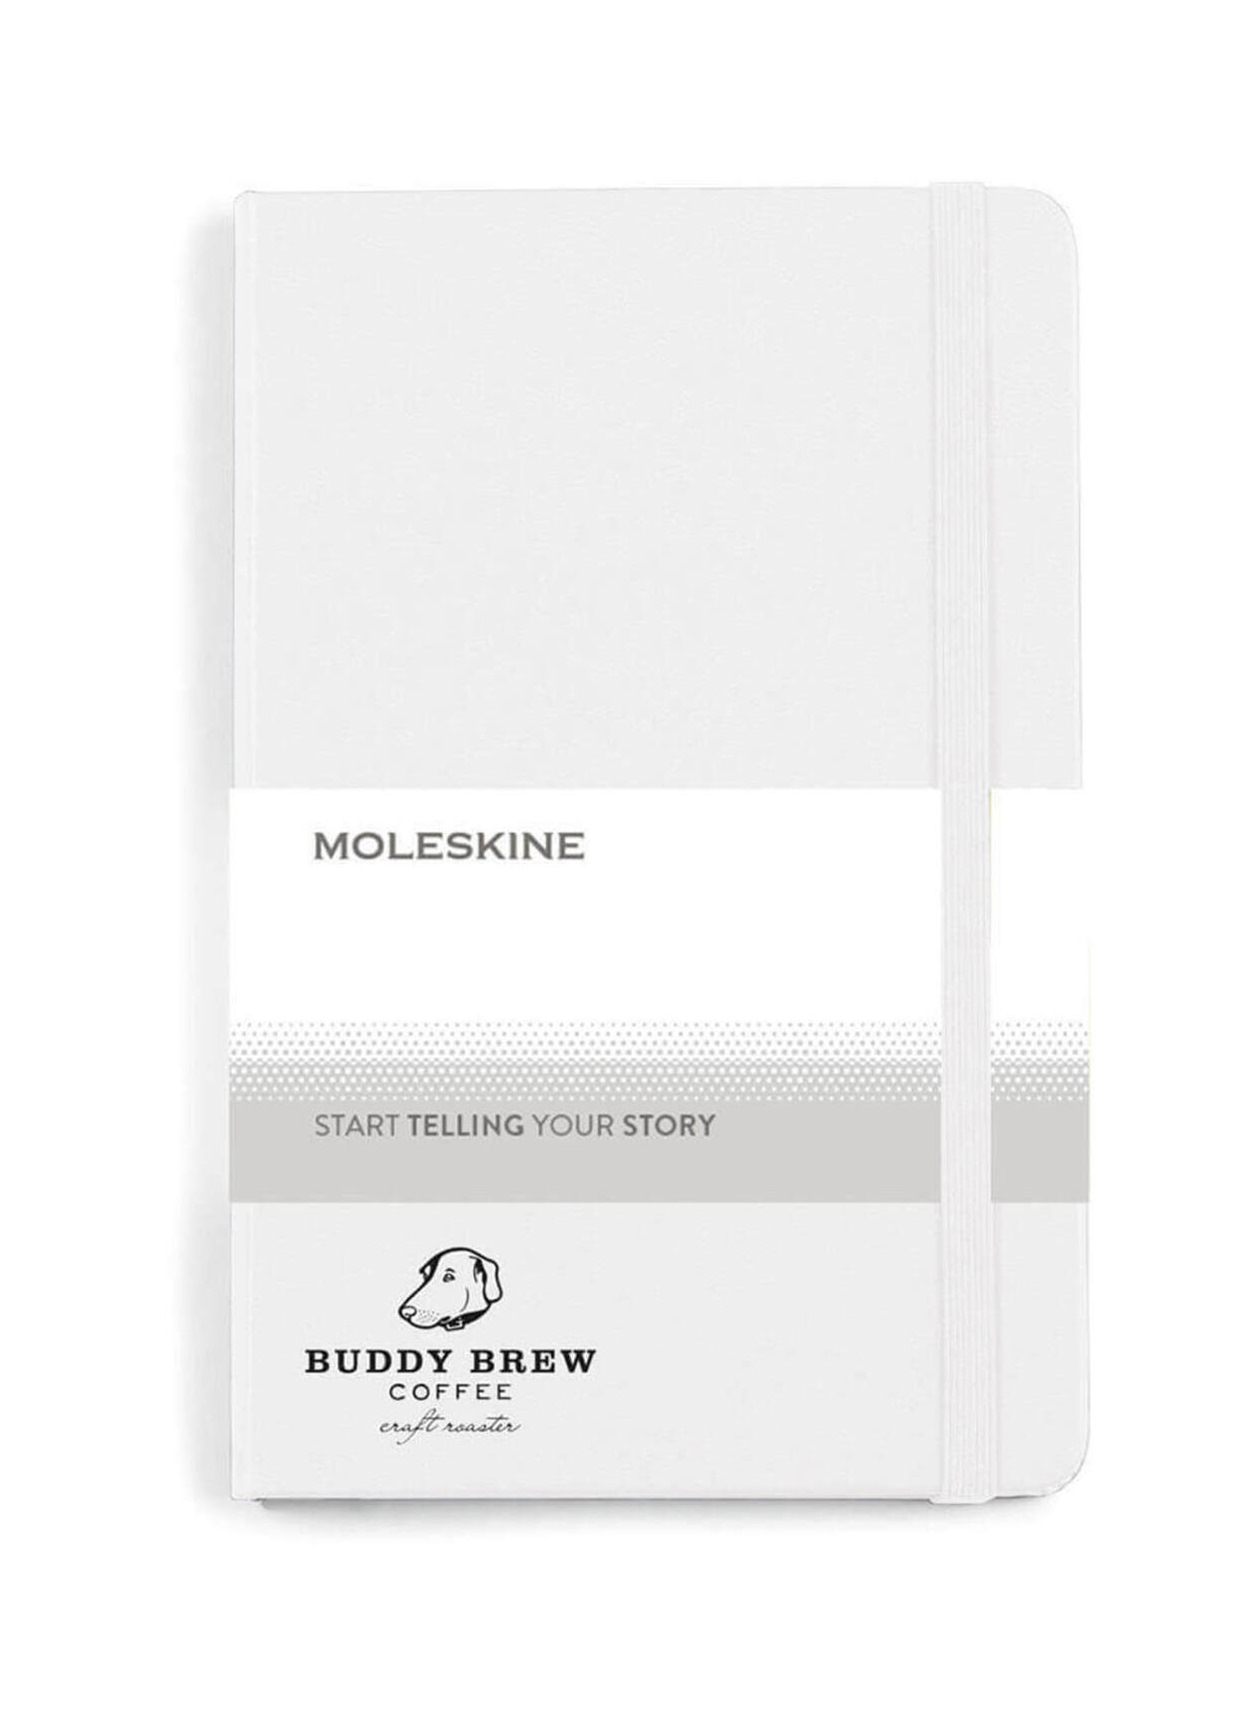 Moleskine White Hard Cover Ruled Medium Notebook